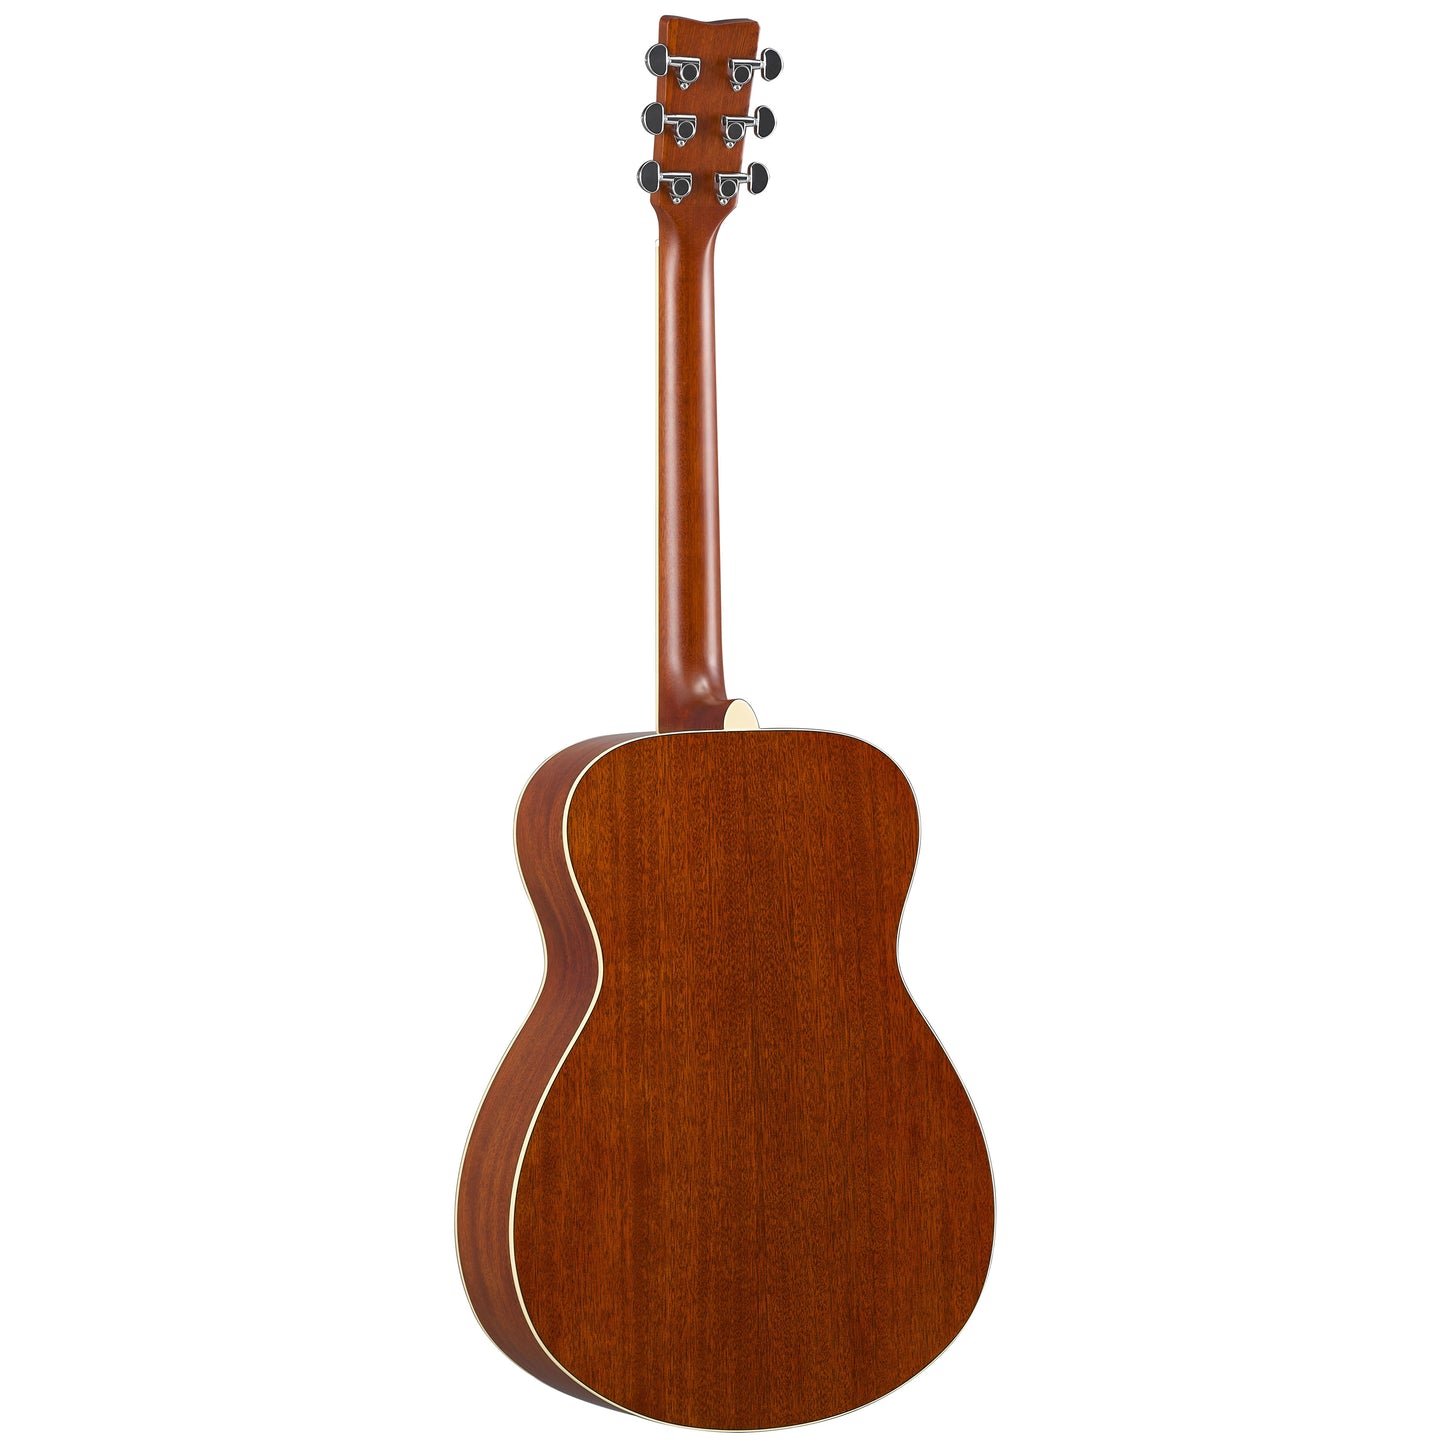 Yamaha FS-TA TransAcoustic Acoustic Guitar